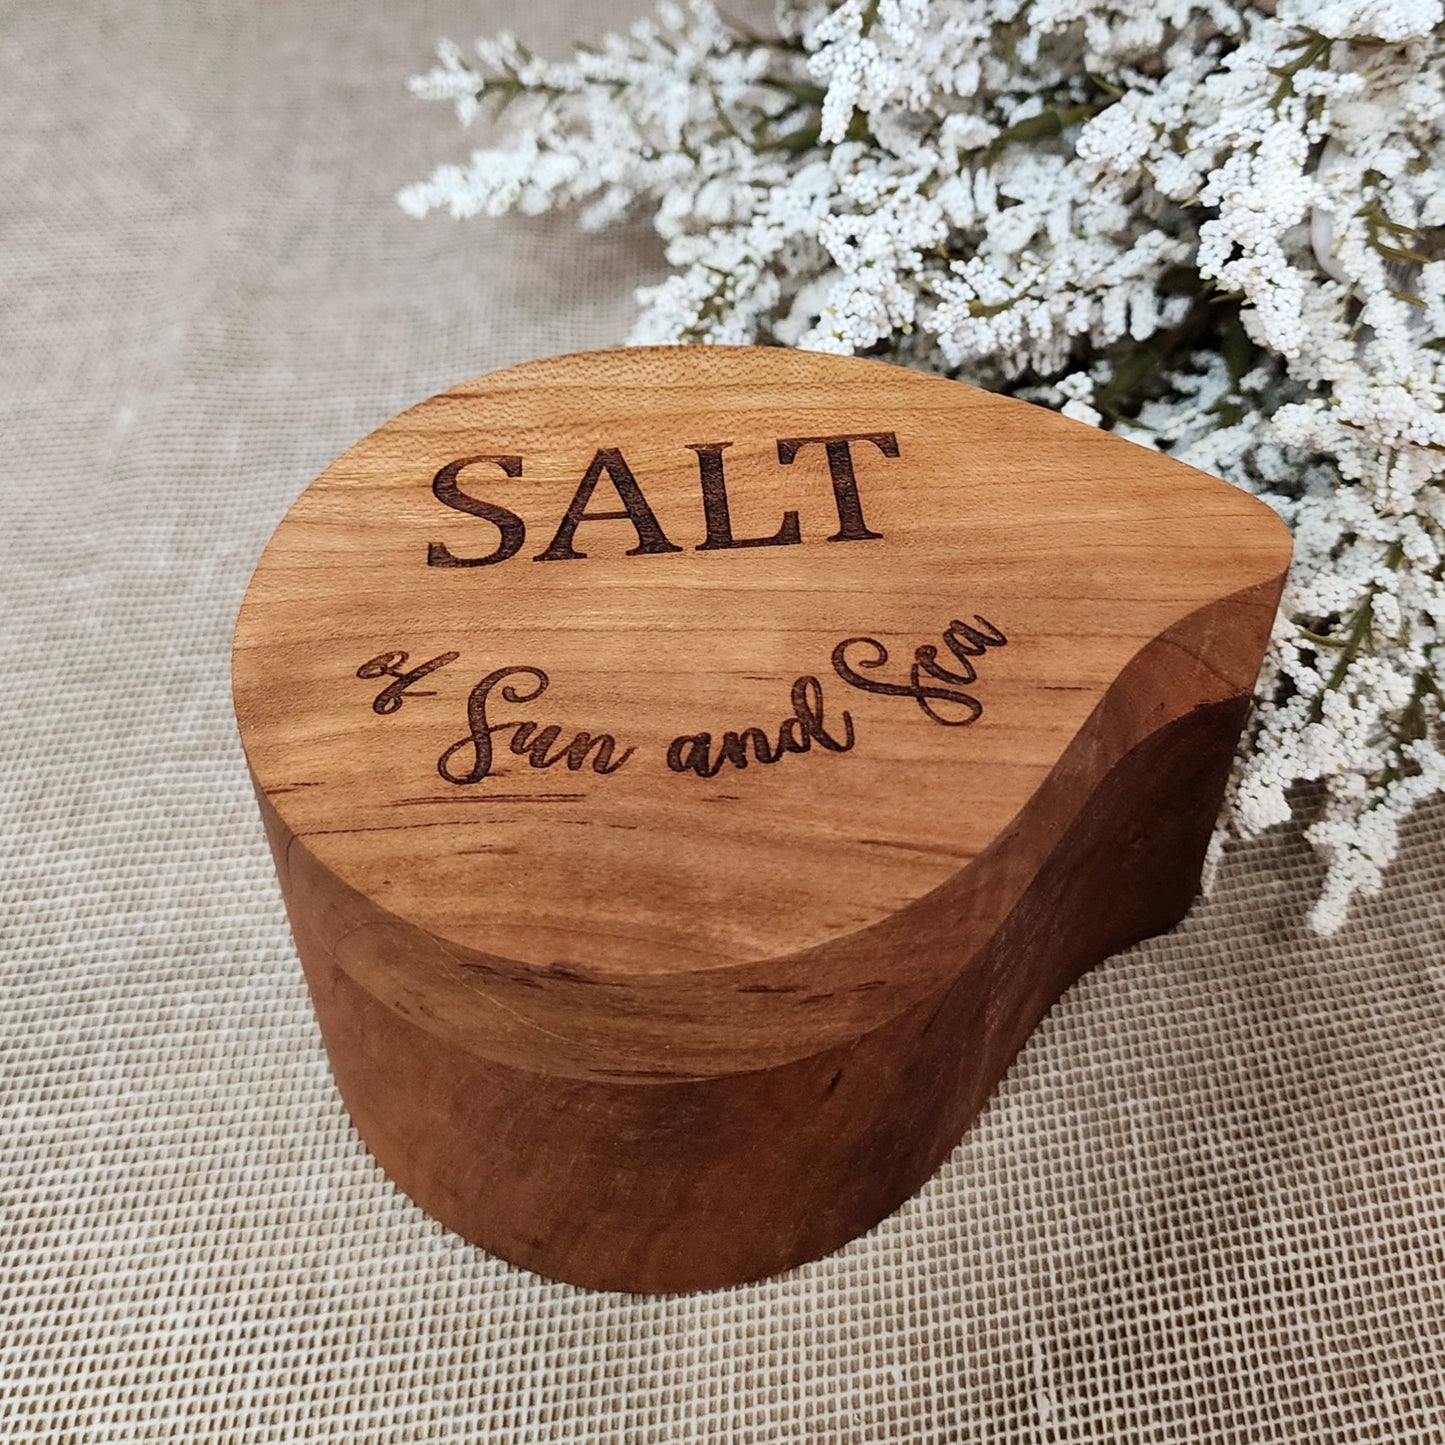 Cherry Teardrop  Salt Cellar with swivel lid, Wood Salt Cellar, Pinch Pot, Salt Holder, Salt Pig, Spice Box, Chef Gift, Foodie Gift